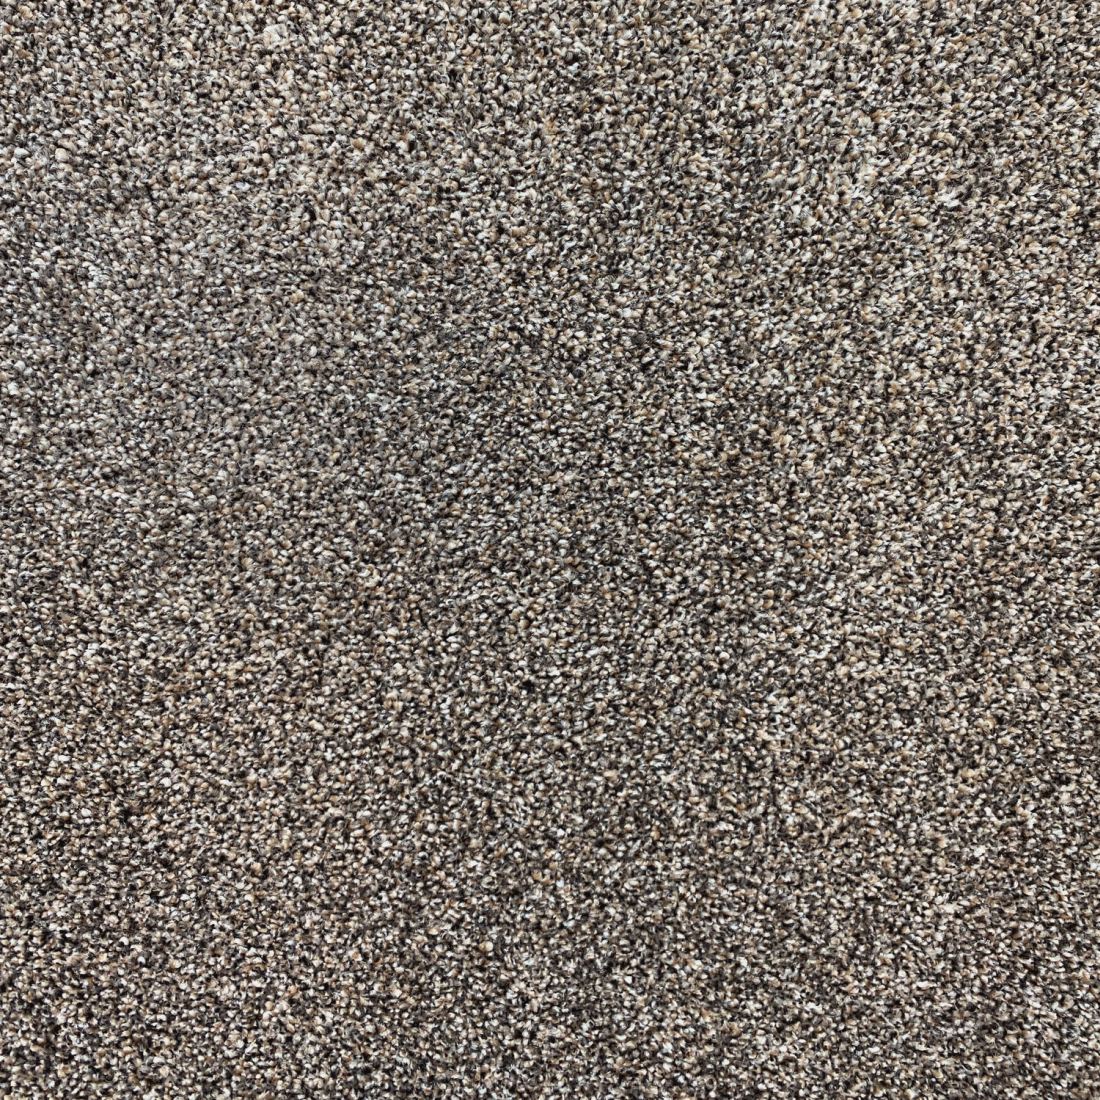 Invincible Rustic Stain Resistant Twist Carpet - Acclaim